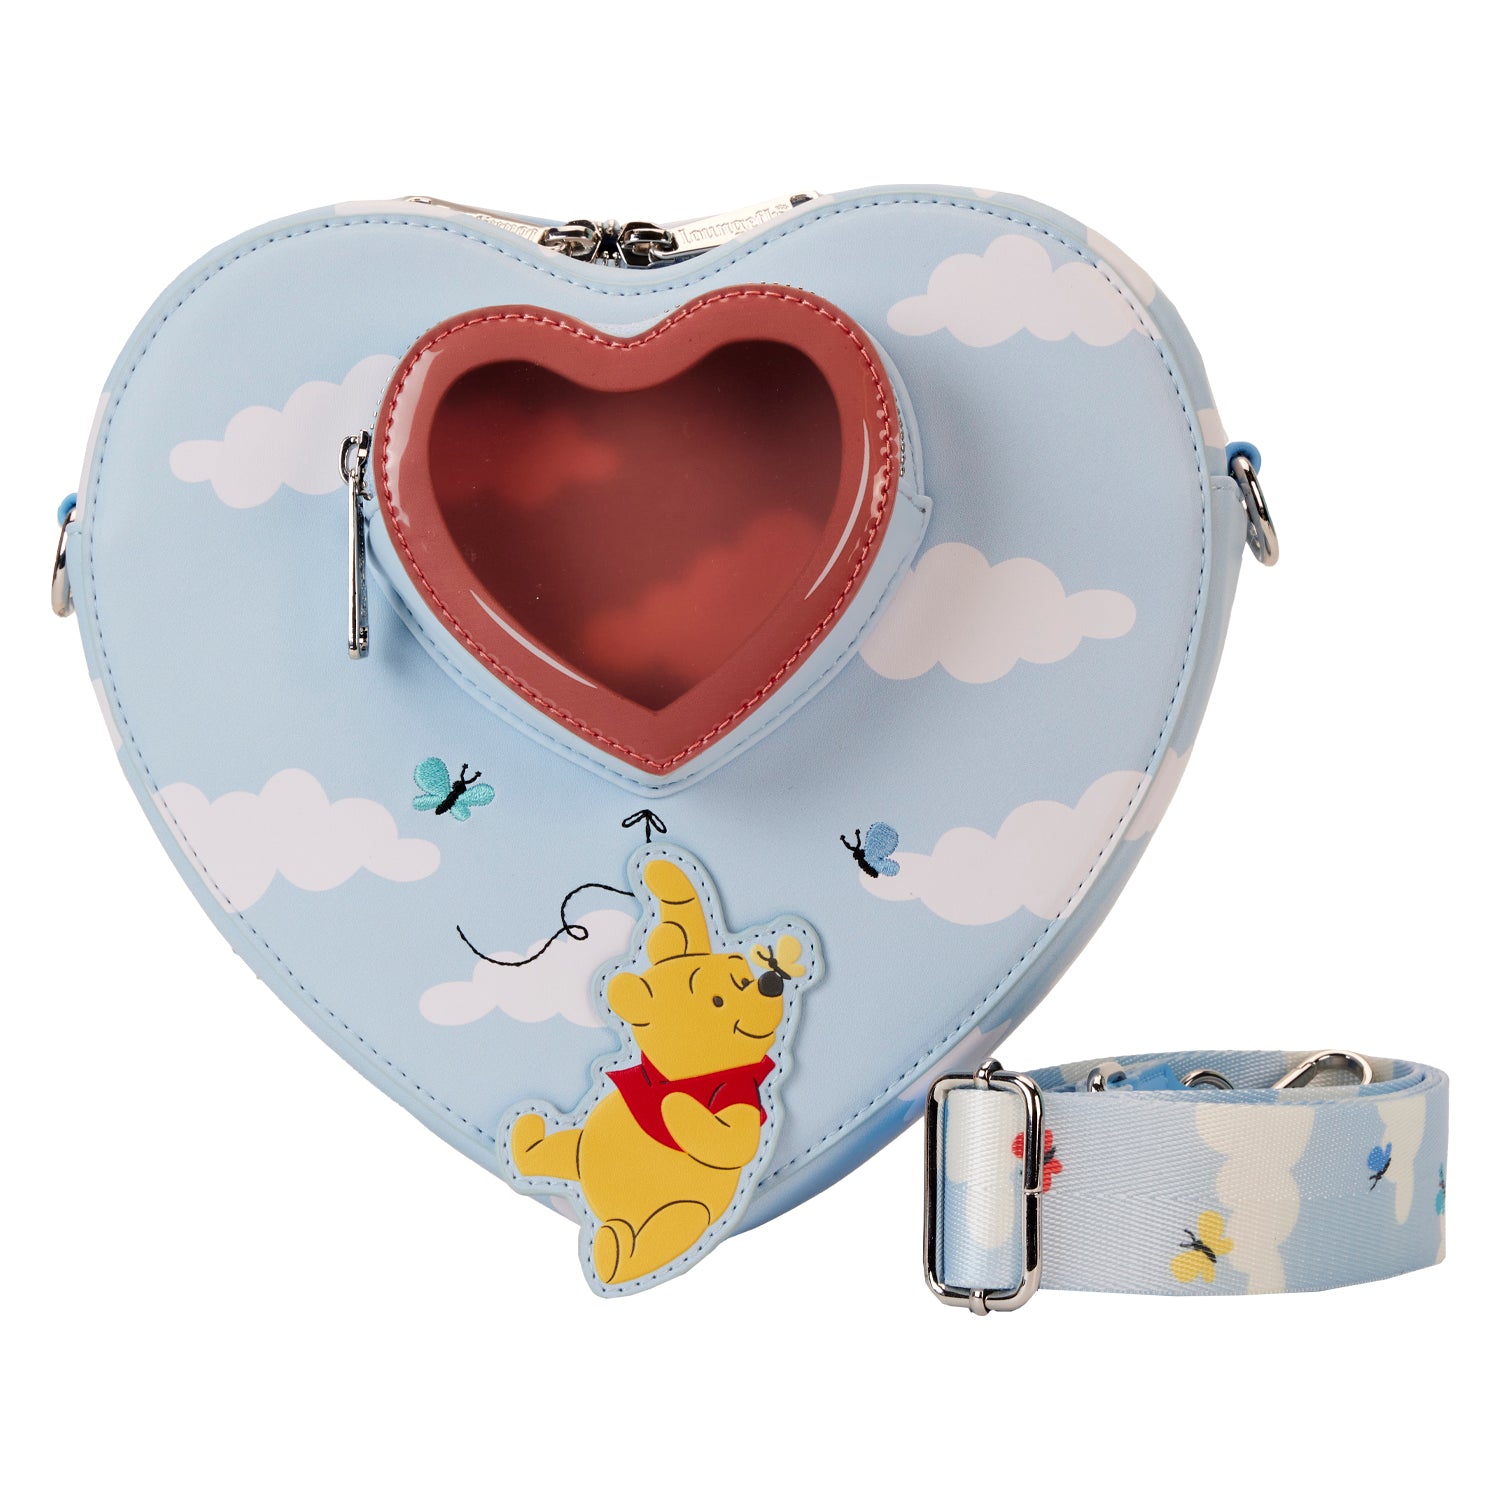 Loungefly x Disney Winnie the Pooh Heart Balloon Crossbody Bag